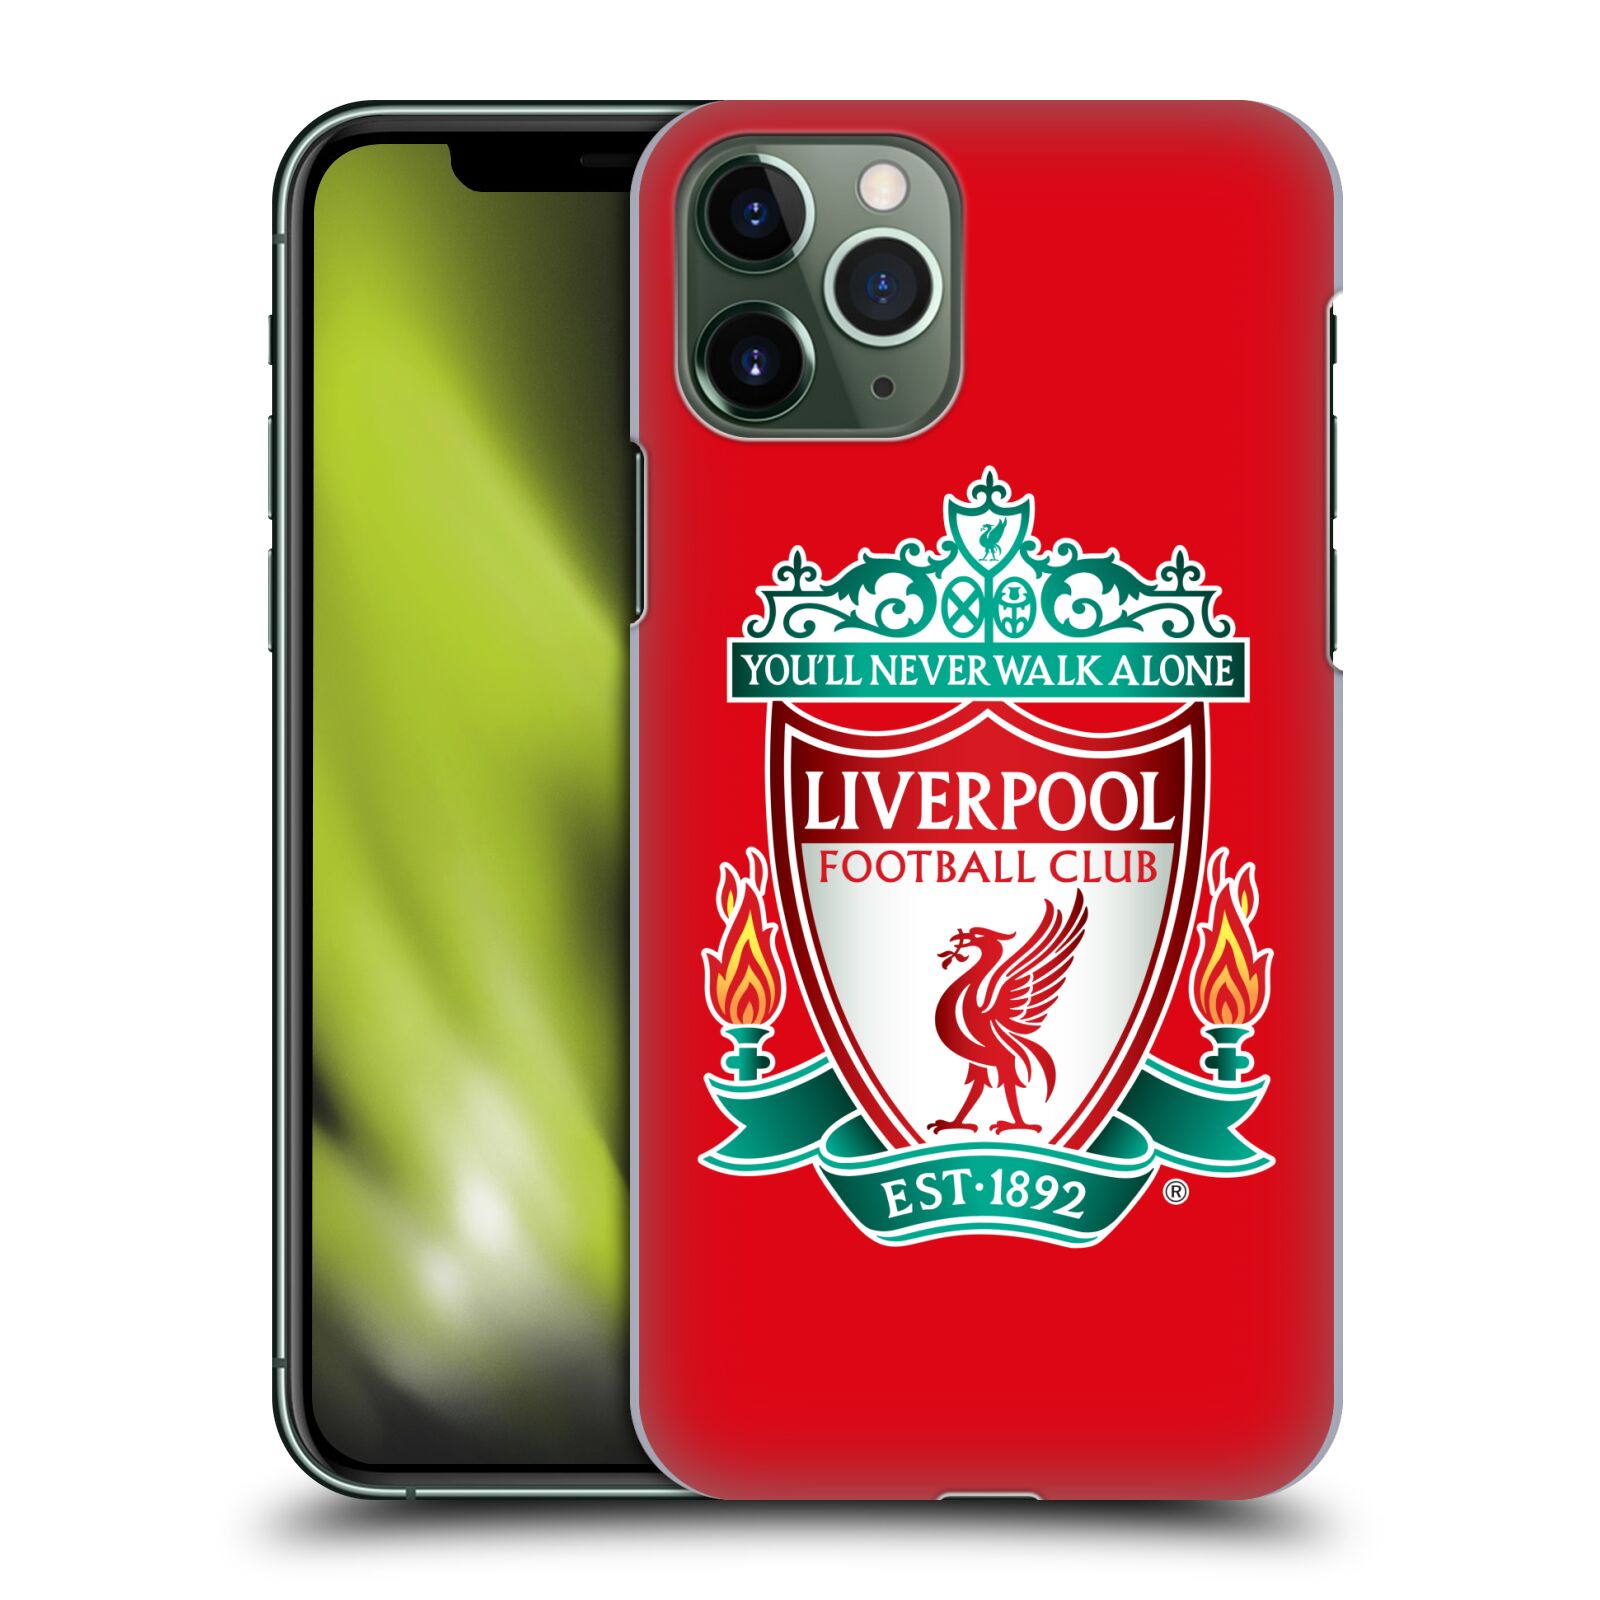 Pouzdro na mobil Apple Iphone 11 PRO - HEAD CASE - Fotbalový klub Liverpool barevný znak červené pozadí